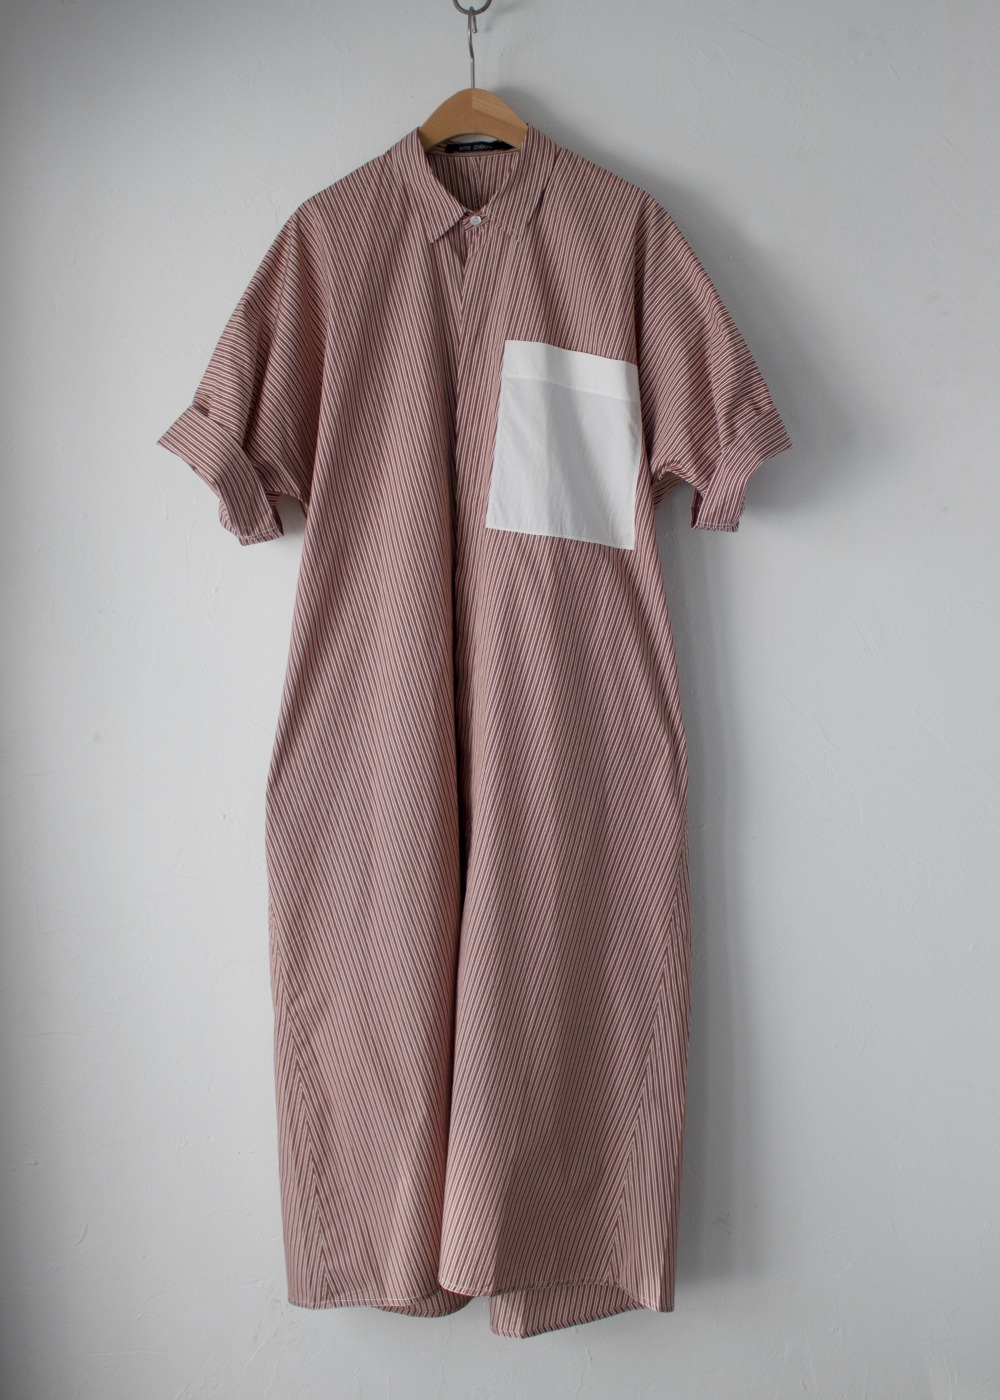 DORIS - Dress-Shirt Short Slv 3 pockets  - Woven Brick Stripe / Ivory